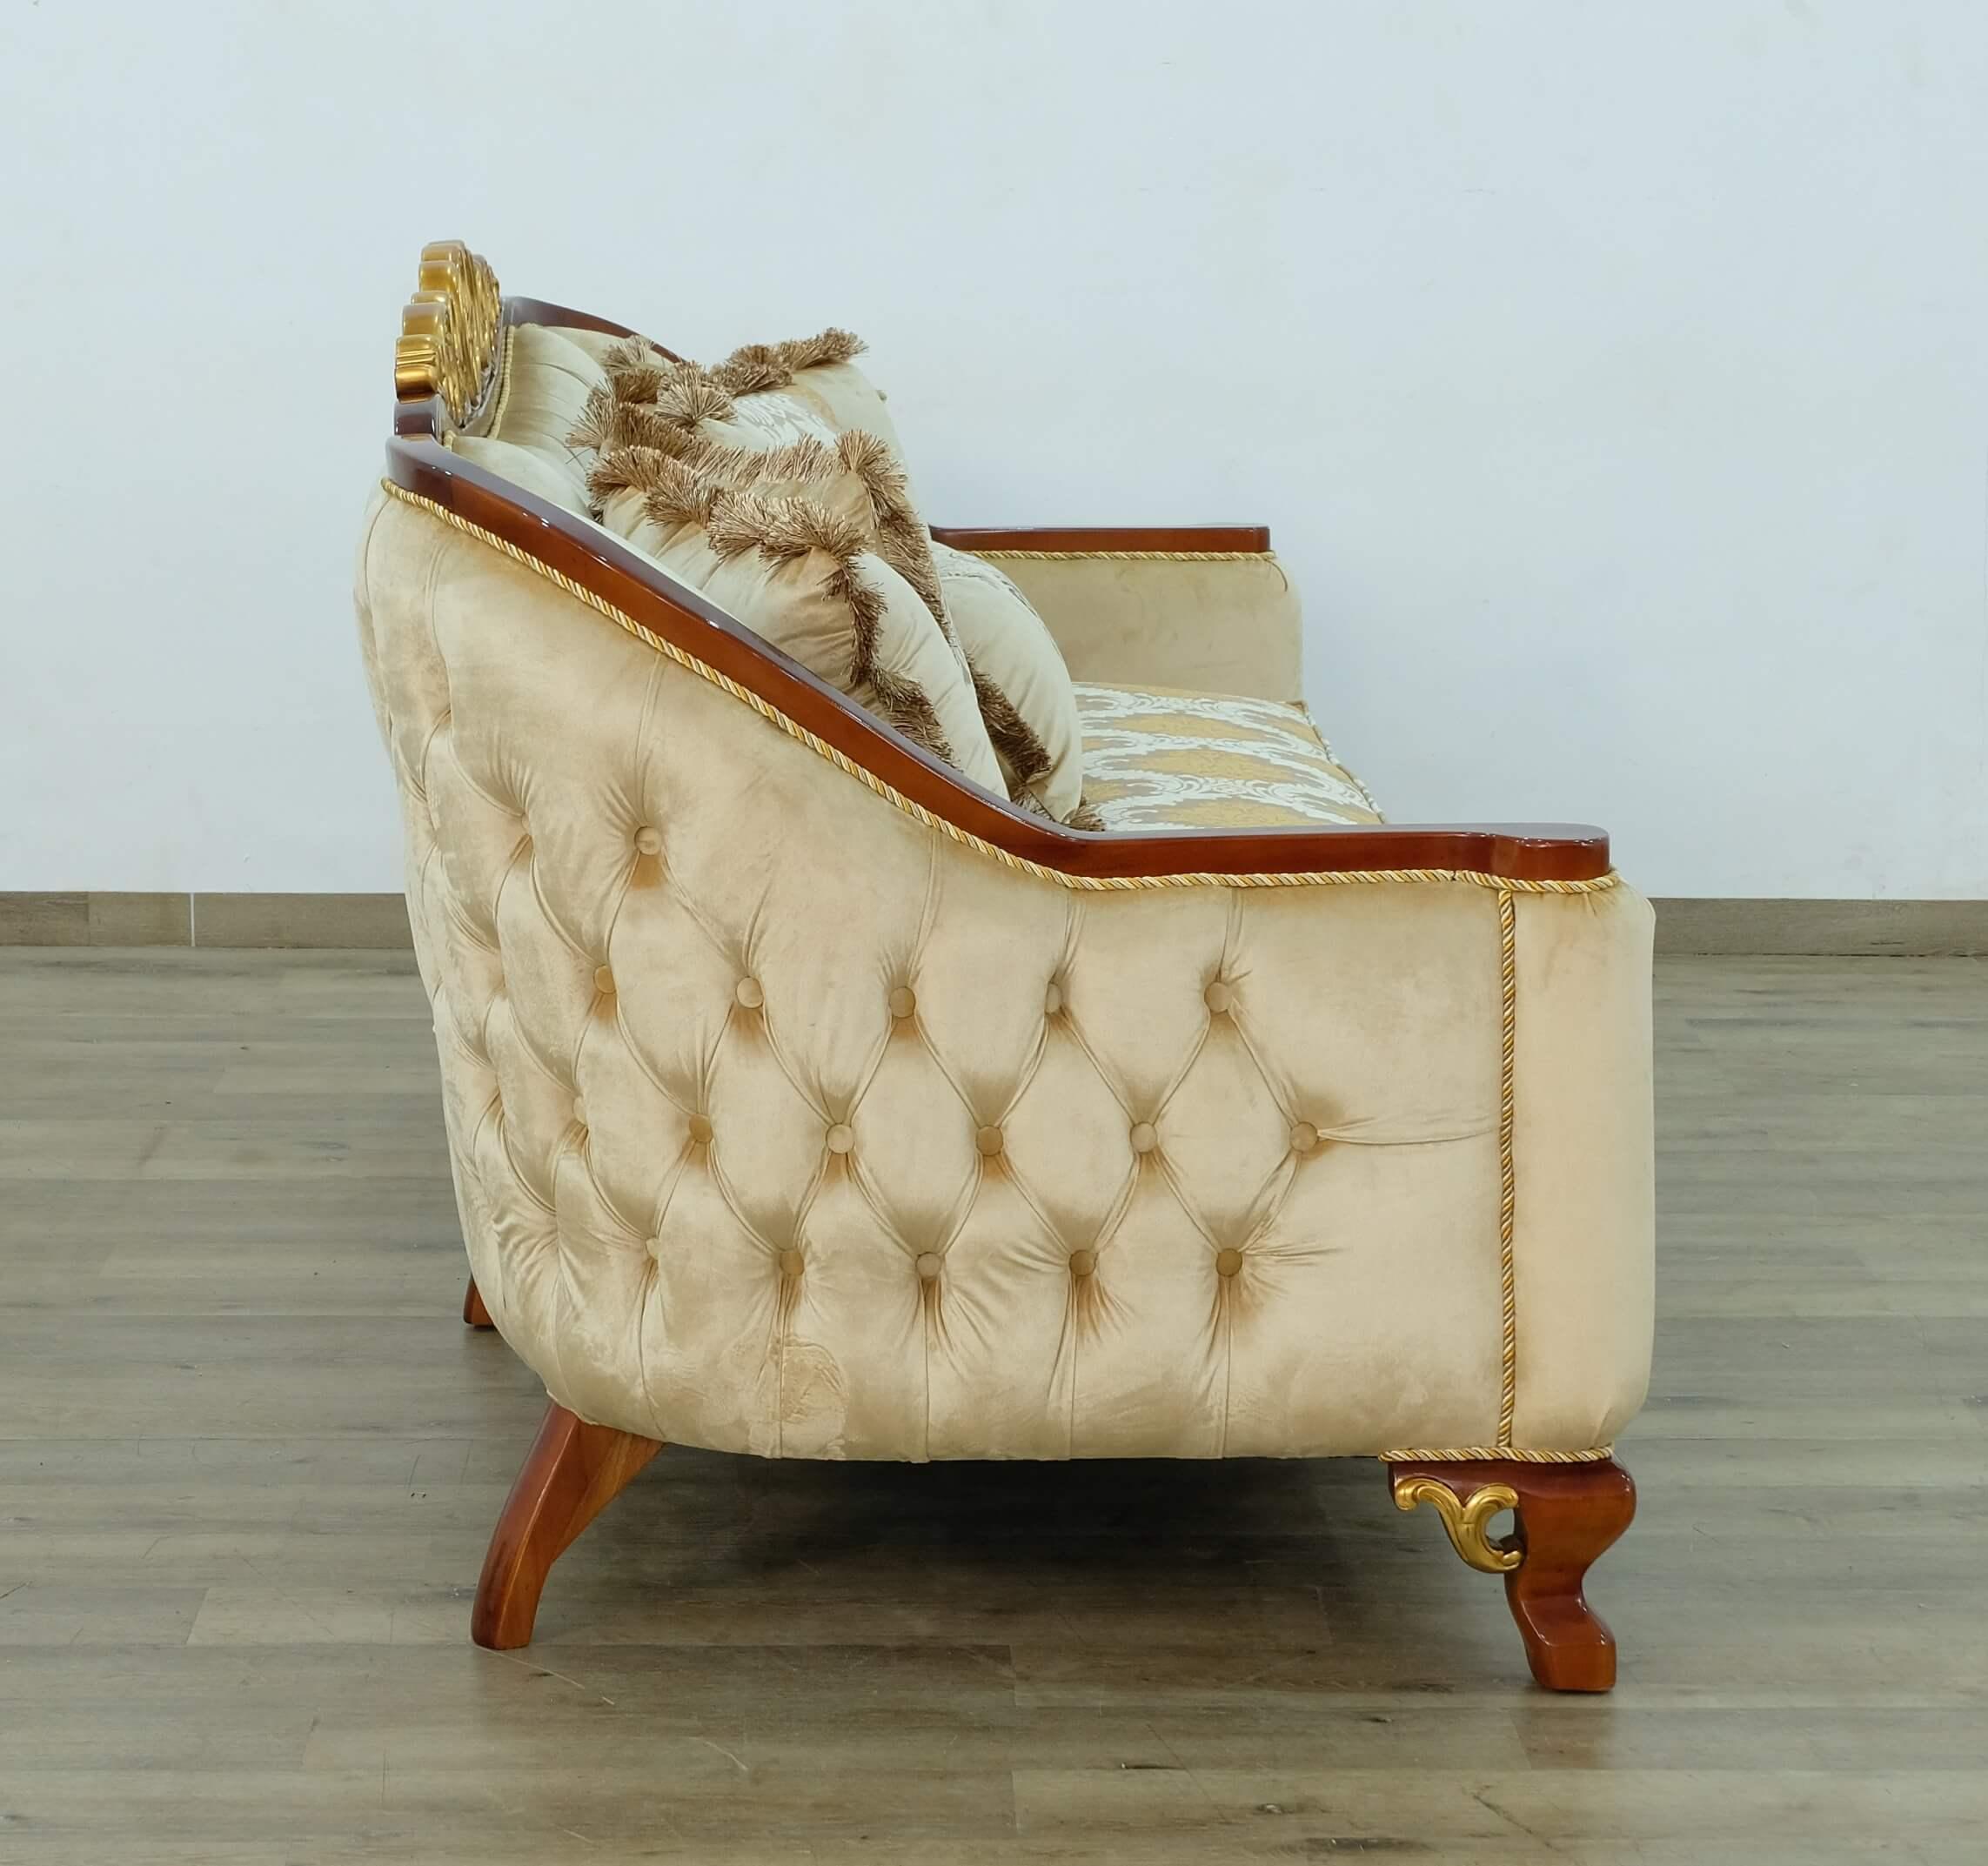 

    
Luxury Brown & Gold Wood Trim ANGELICA II Sofa Set 3Pcs EUROPEAN FURNITURE Classic
